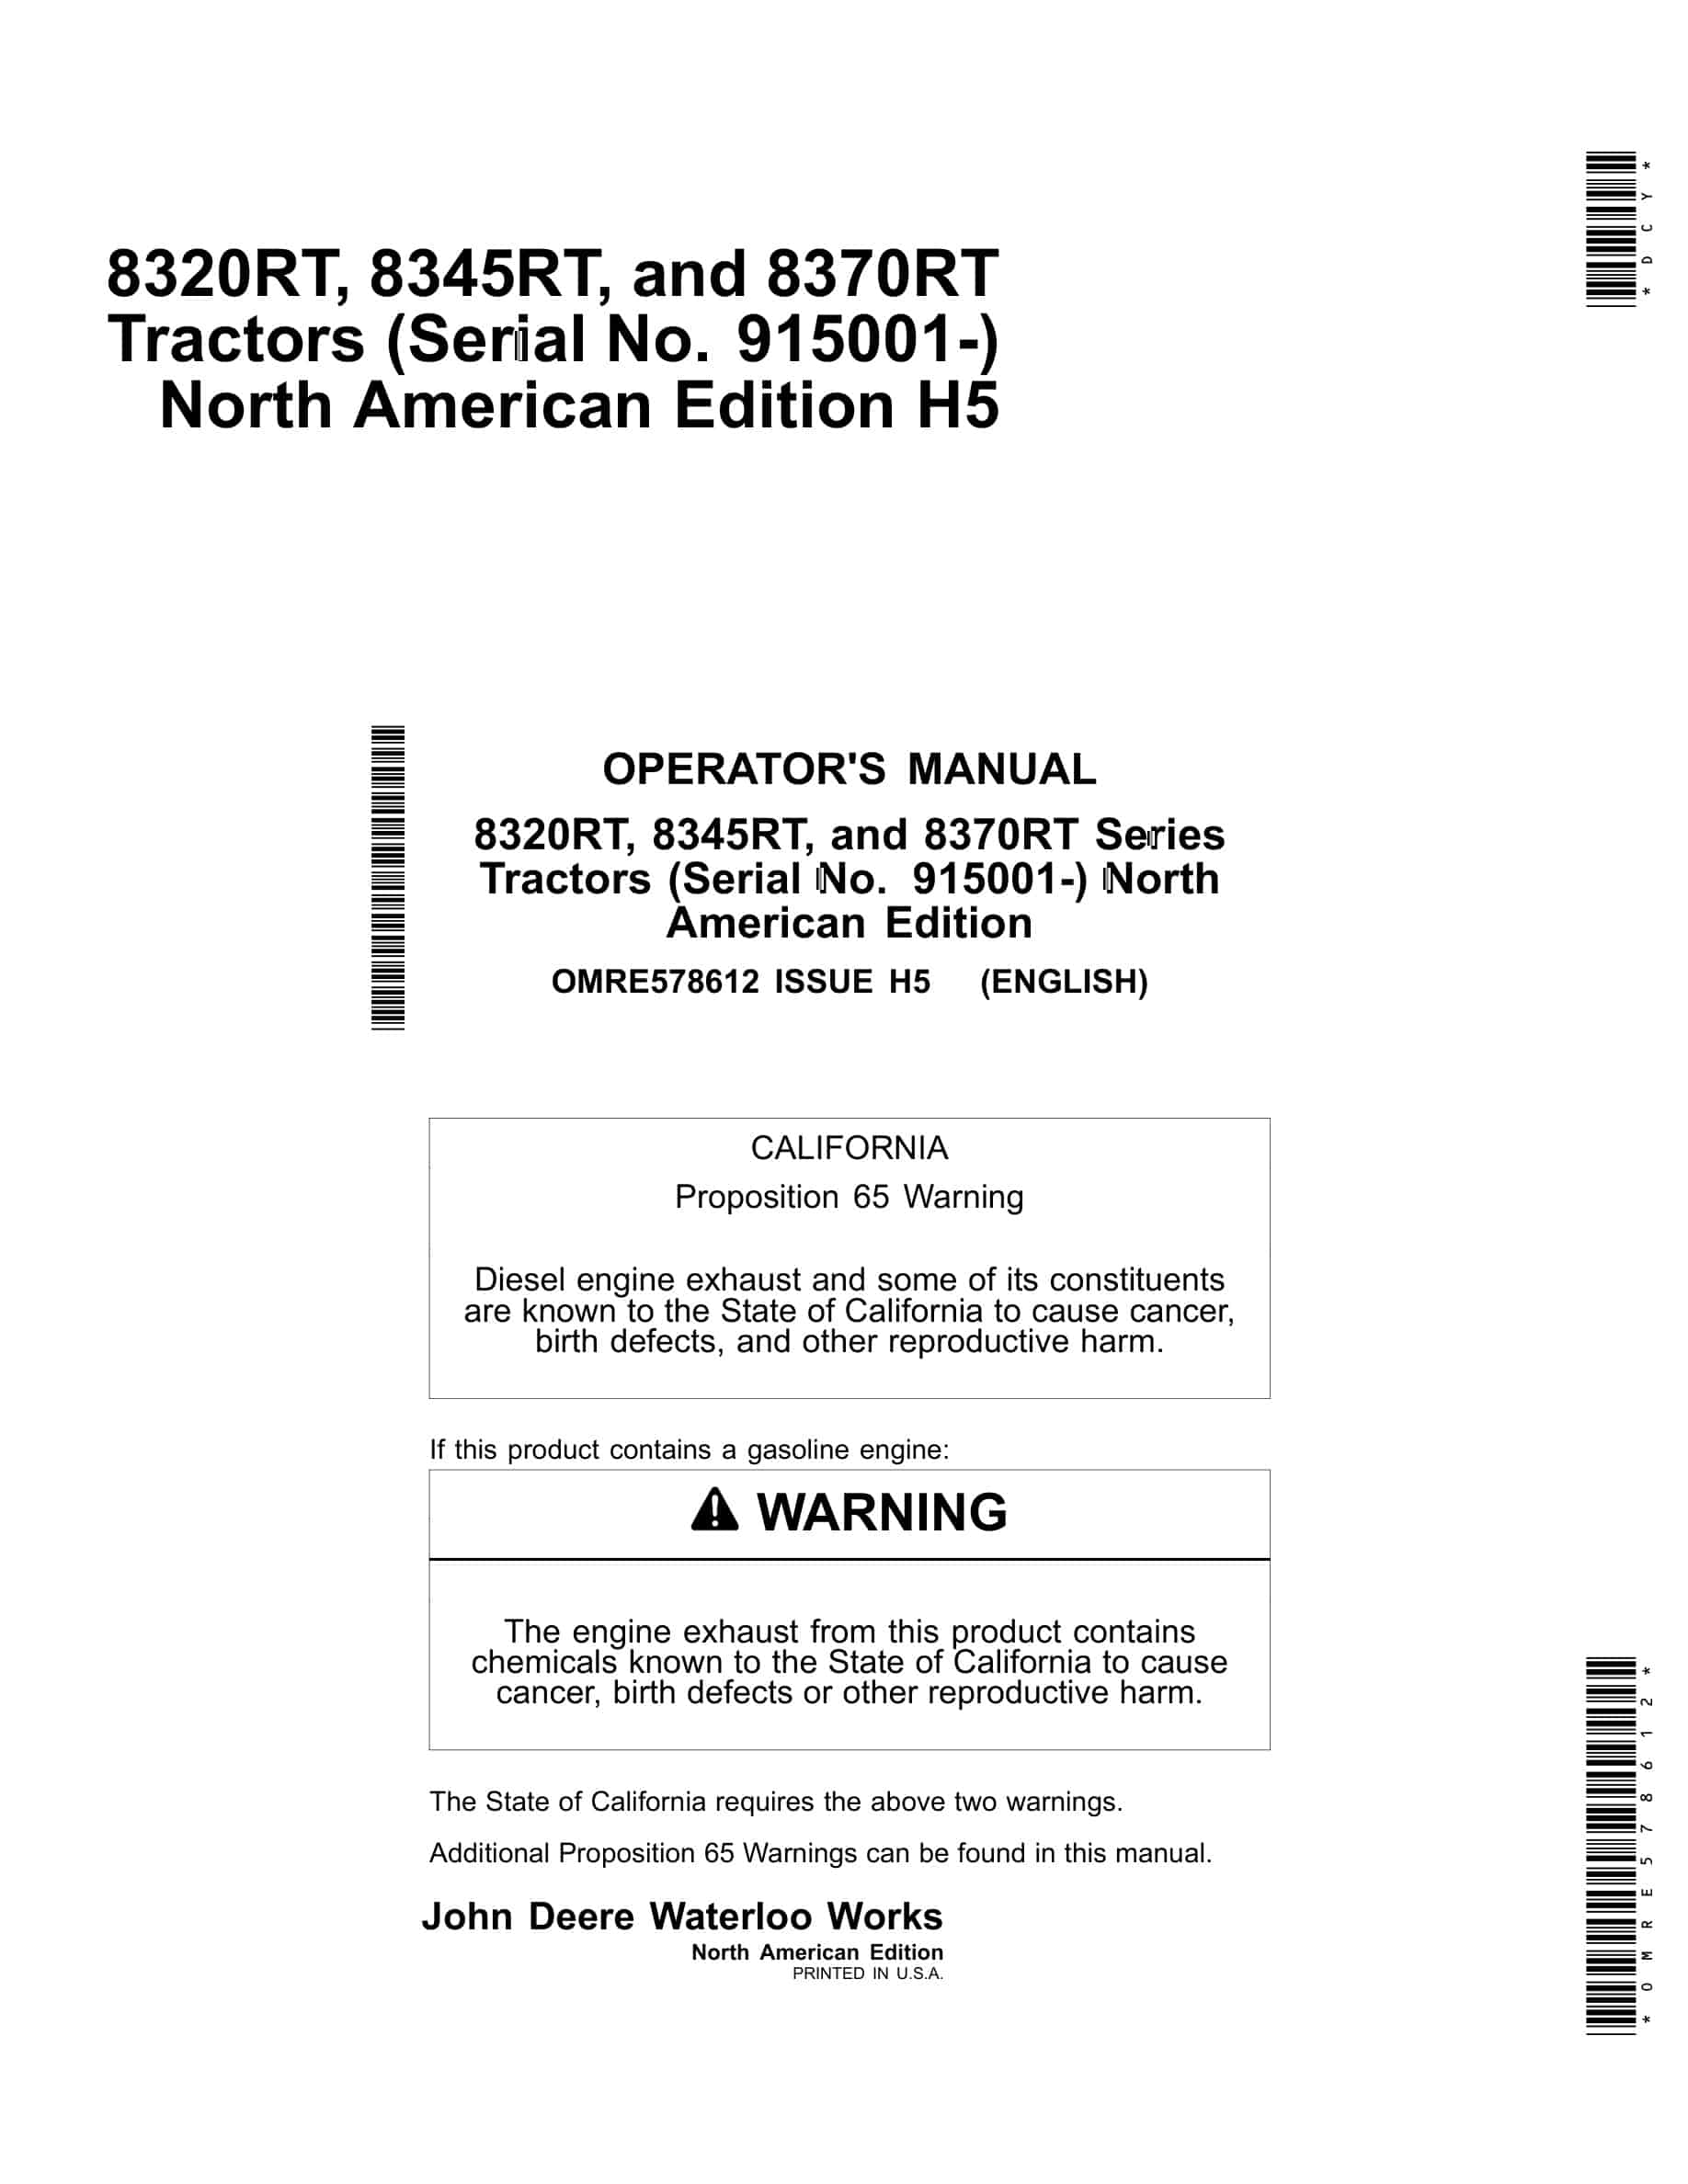 John Deere 8320RT, 8345RT, and 8370RT Tractor Operator Manual OMRE578612-1